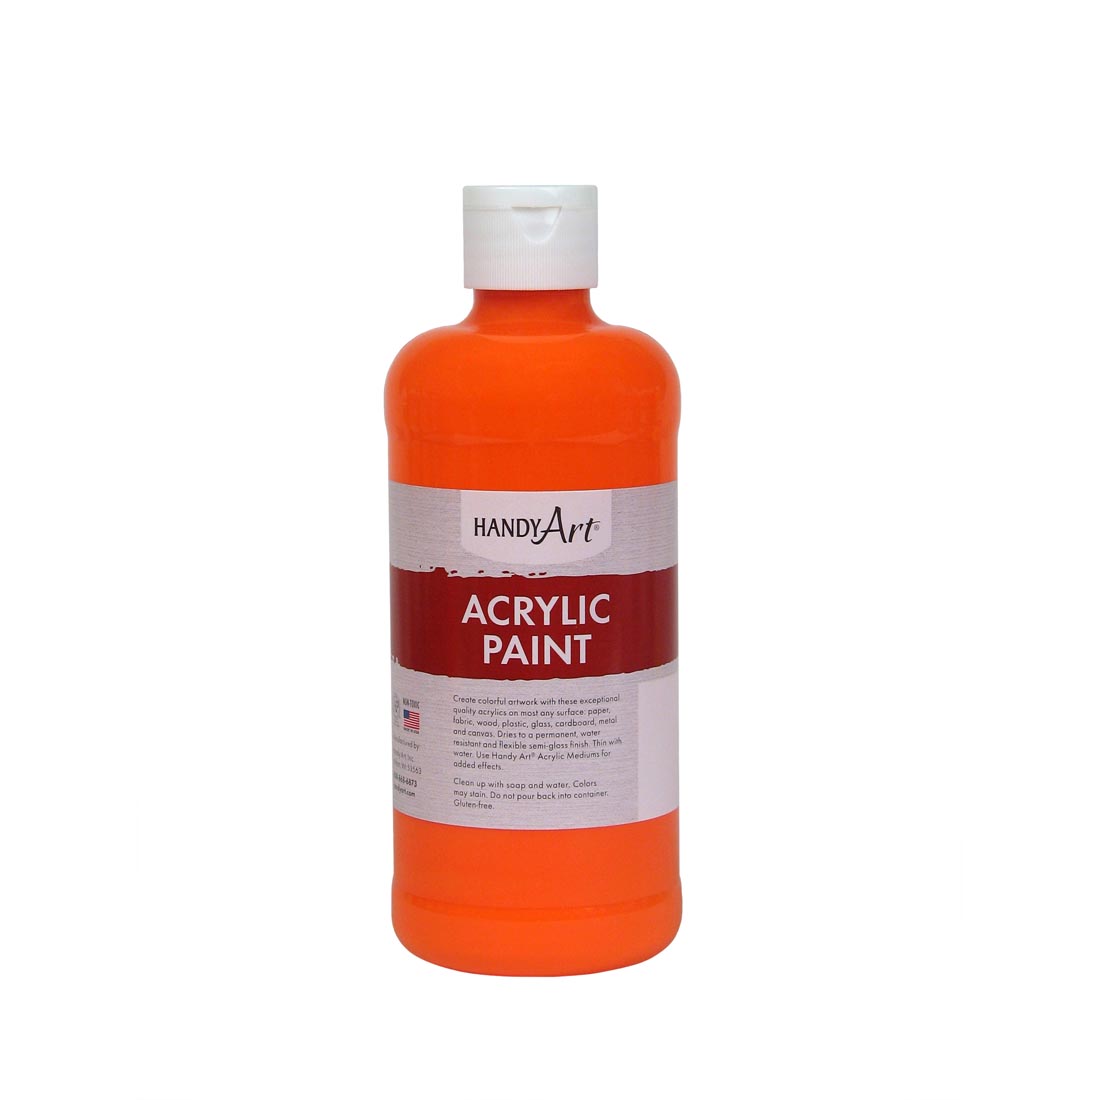 Pint Bottle of Fluorescent Orange Handy Art Acrylic Paint